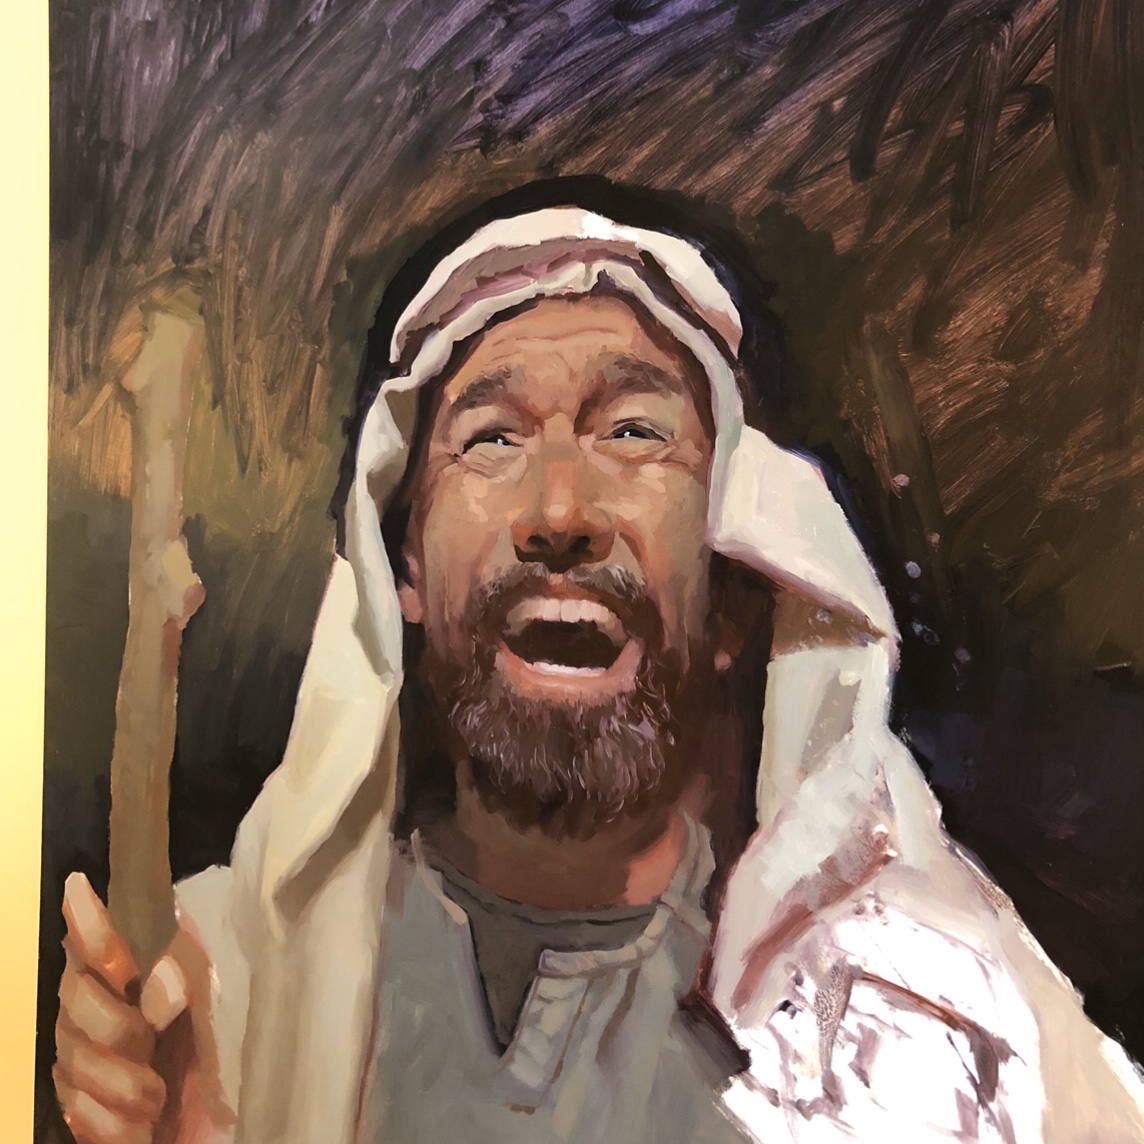 The Power of Art (and shepherd painting progress)